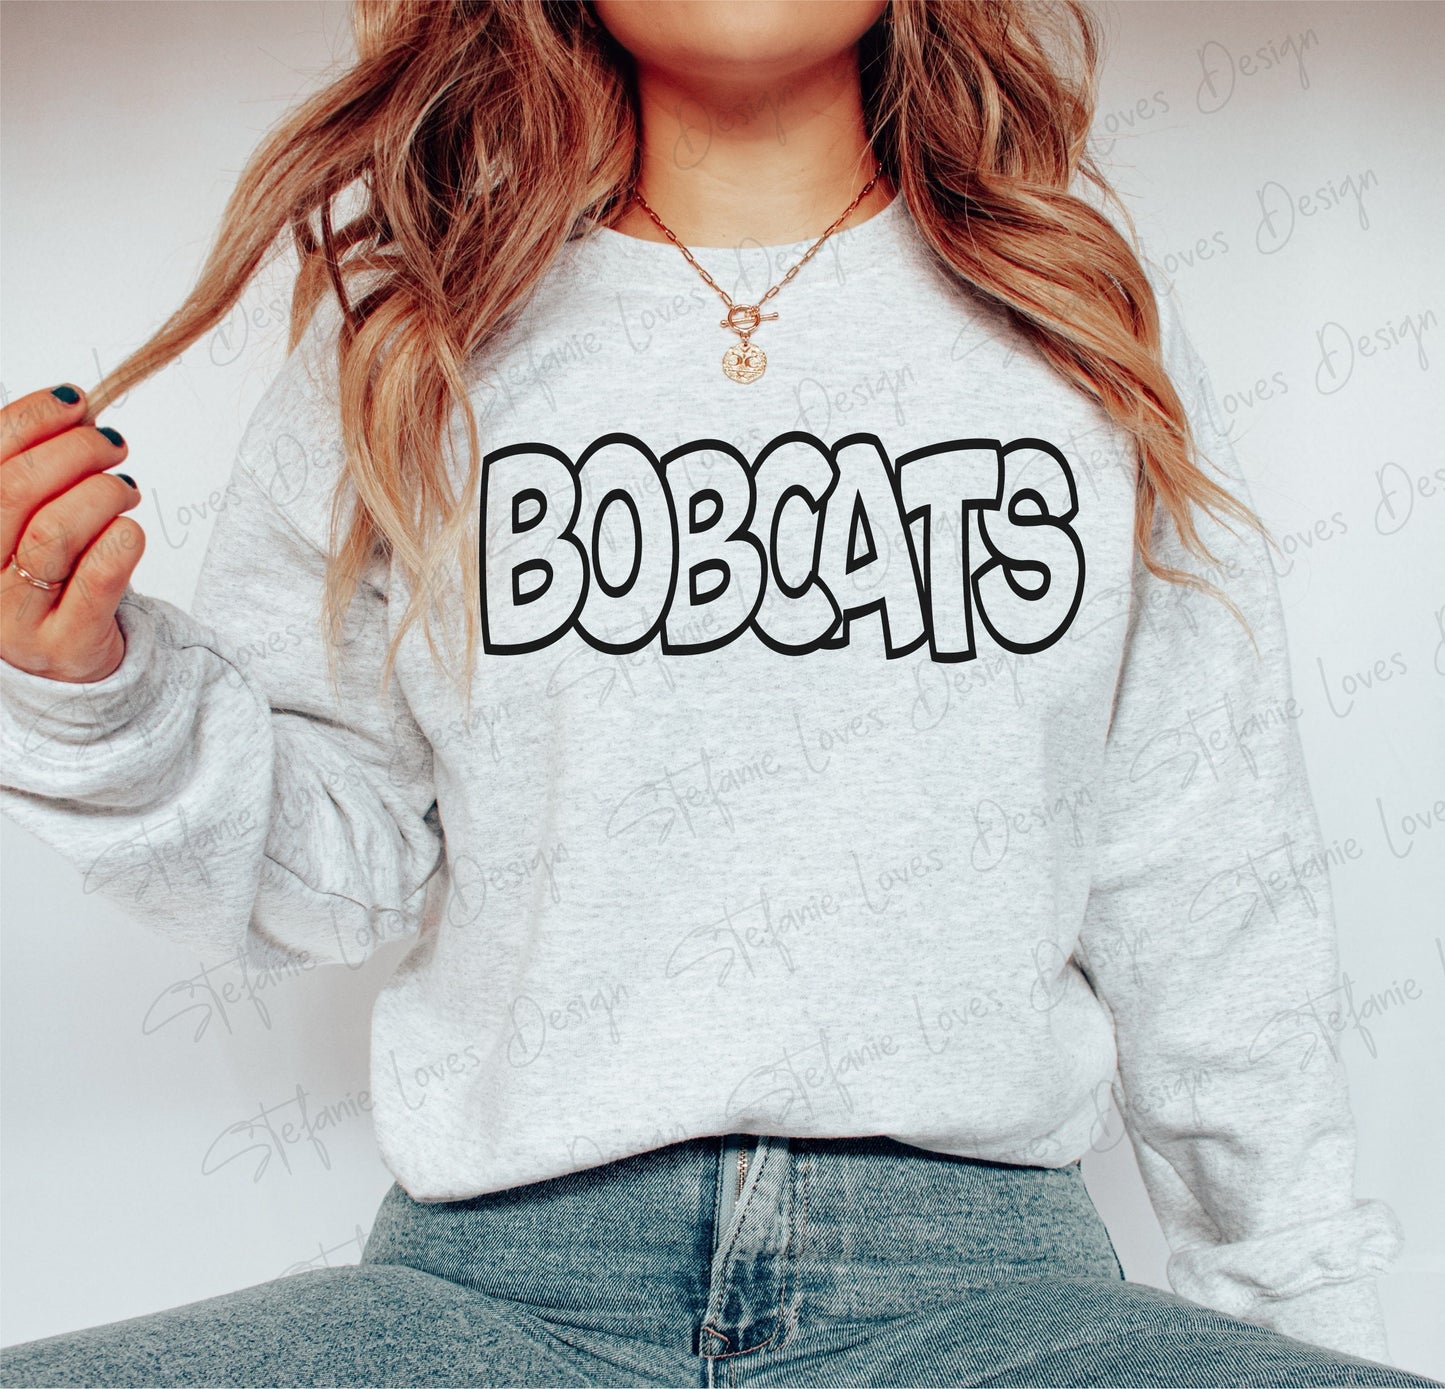 Bobcats svg, Bobcats Outline svg, Bobcats shirt svg, Digital Design, Bobcats Mascot